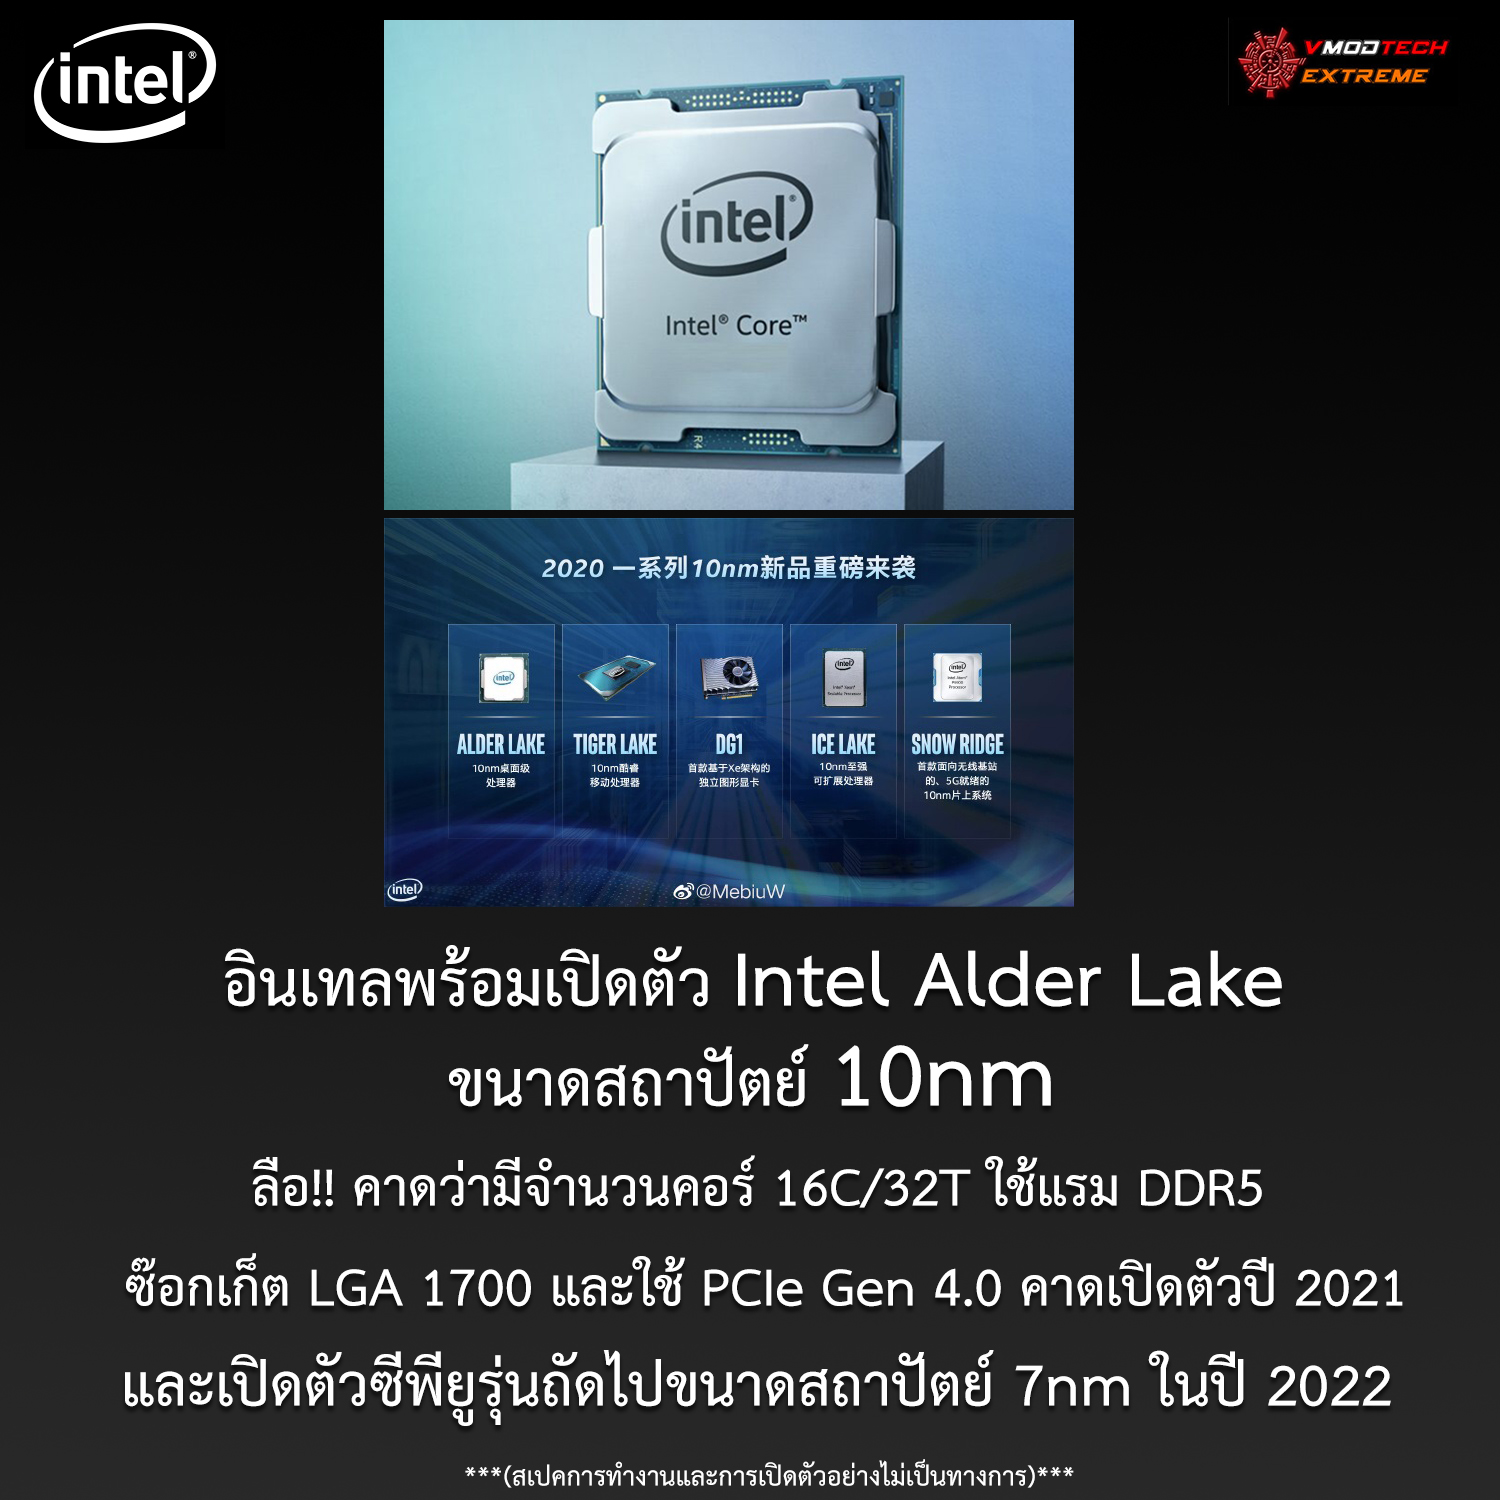 intel alder lake 10nm อินเทลพร้อมเปิดตัว Intel Alder Lake ขนาดสถาปัตย์ 10nm ในปี 2021 และเปิดตัวซีพียูรุ่นถัดไปขนาดสถาปัตย์ 7nm ในปี 2022 